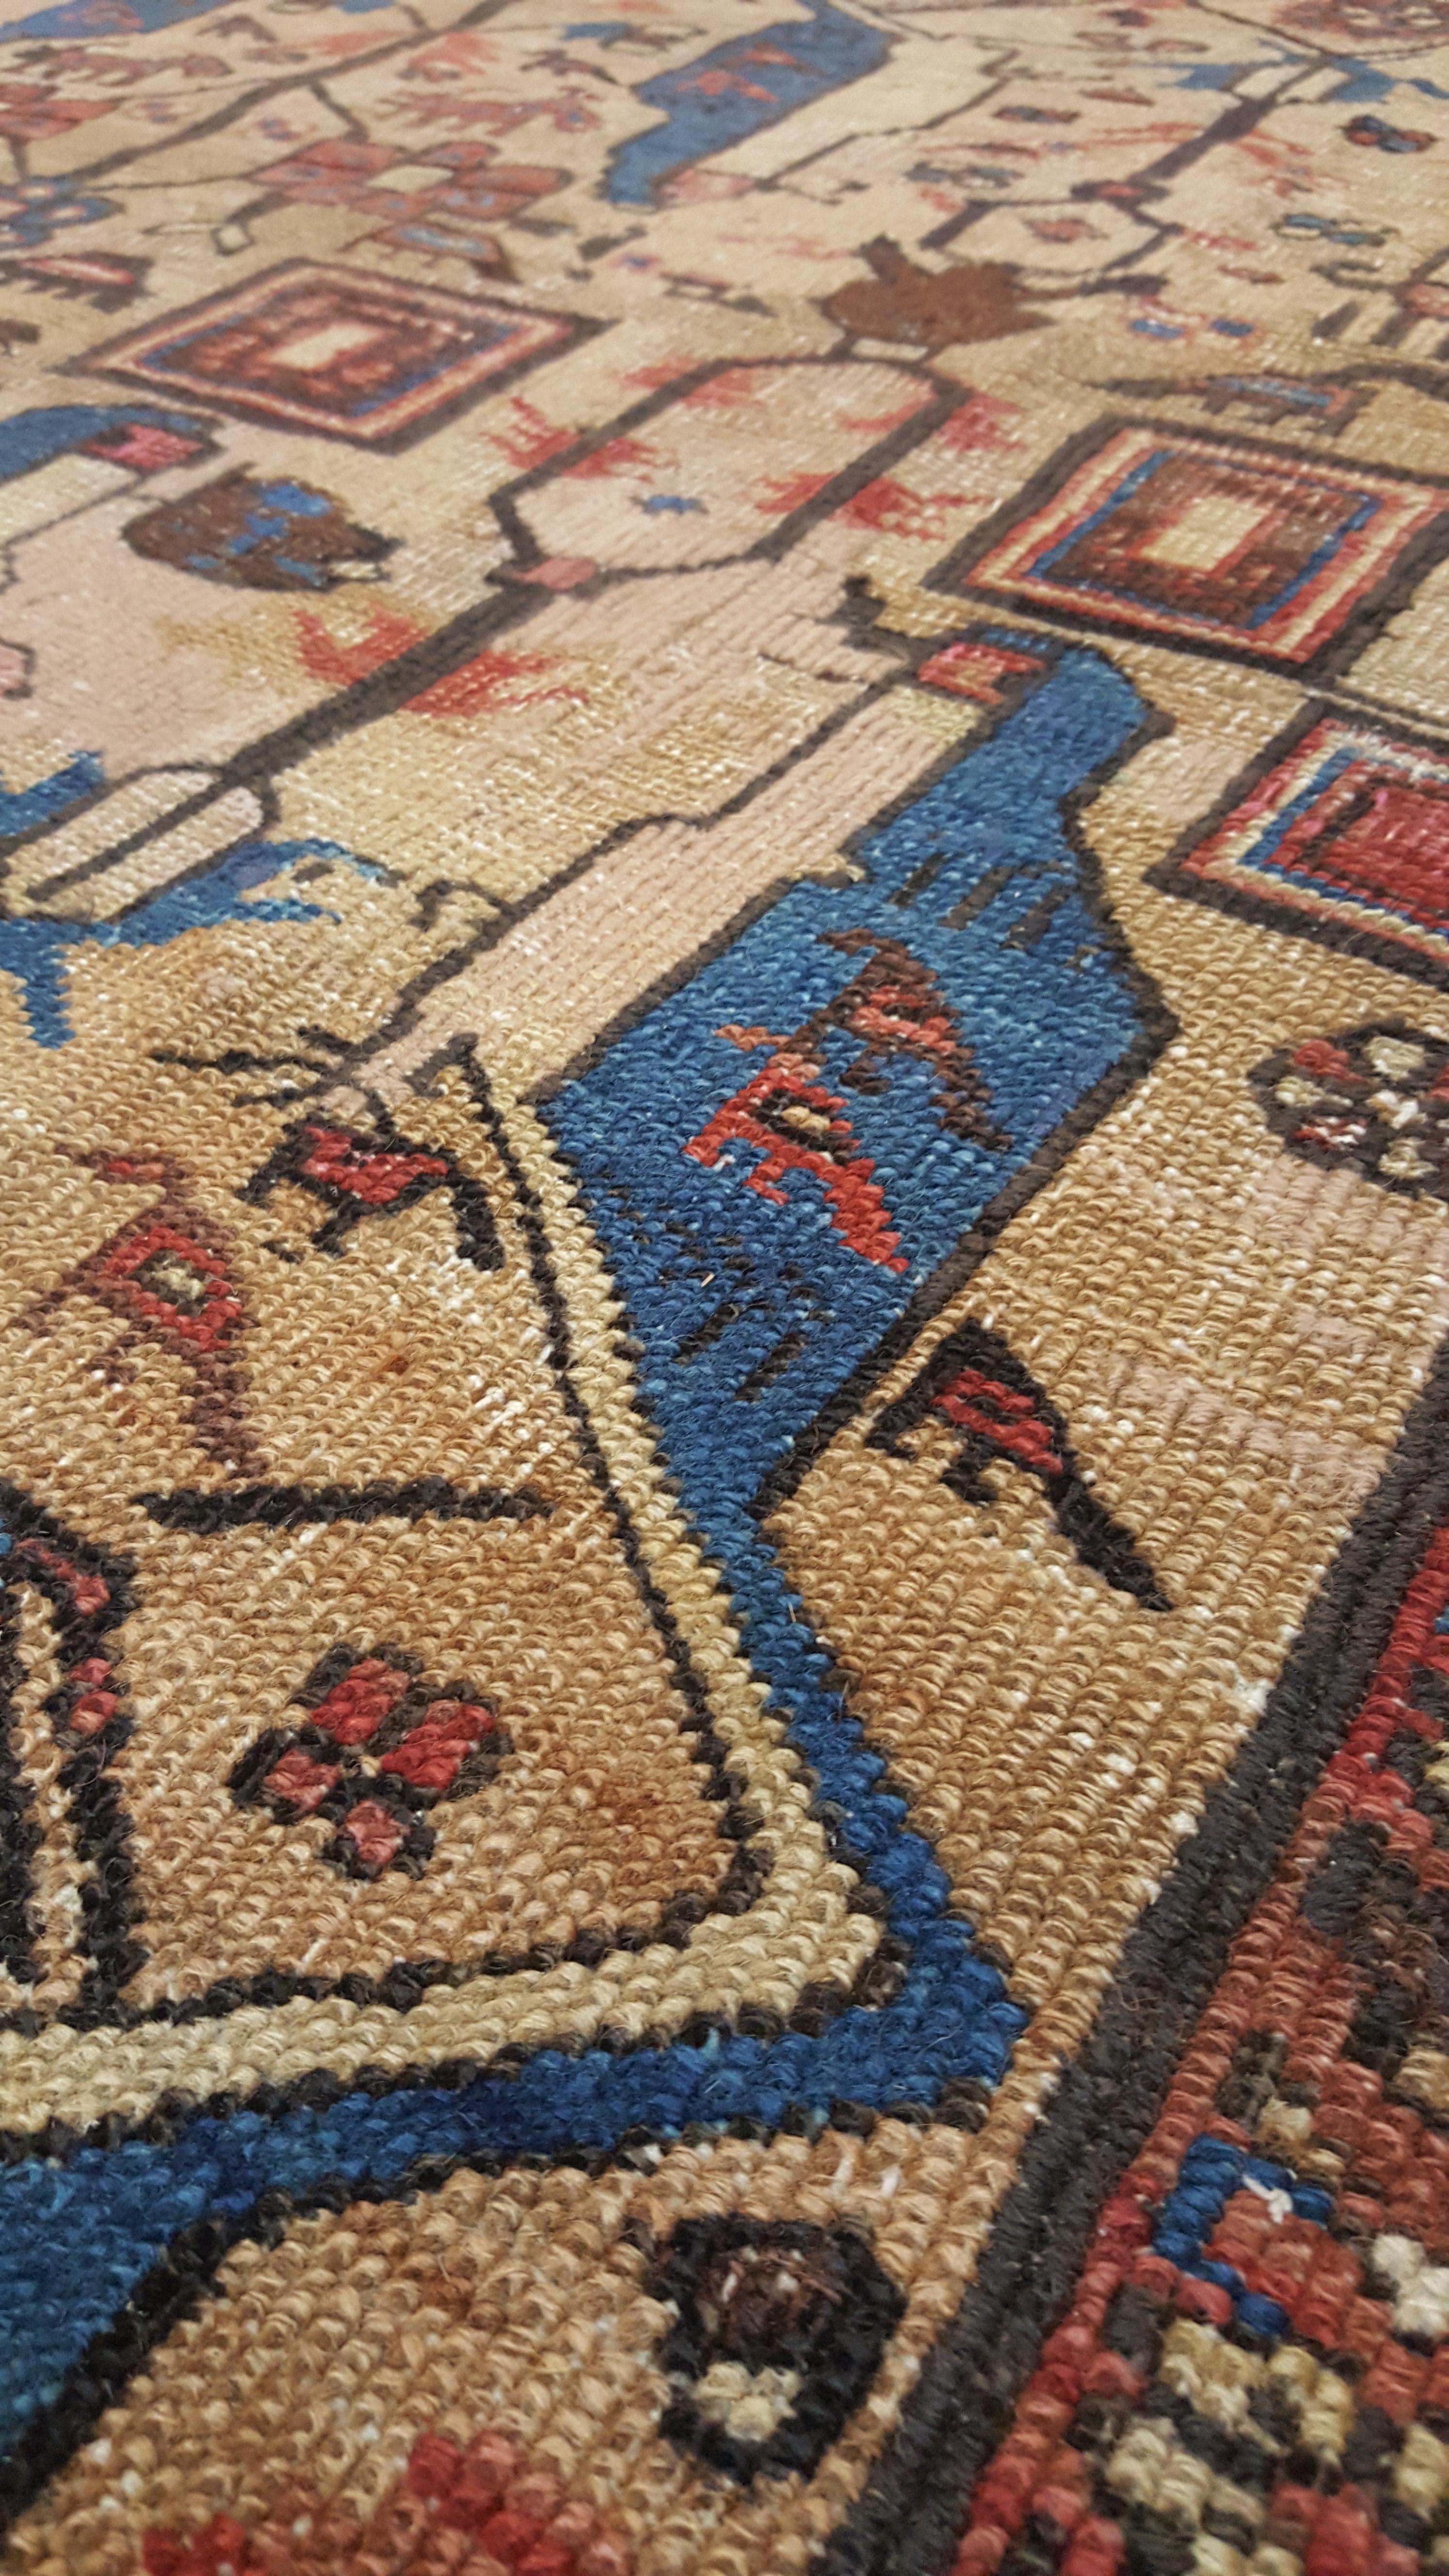 19th Century Antique Persian Serapi Carpet, Handmade Wool Oriental Rug, Gold-Ivory Light Blue